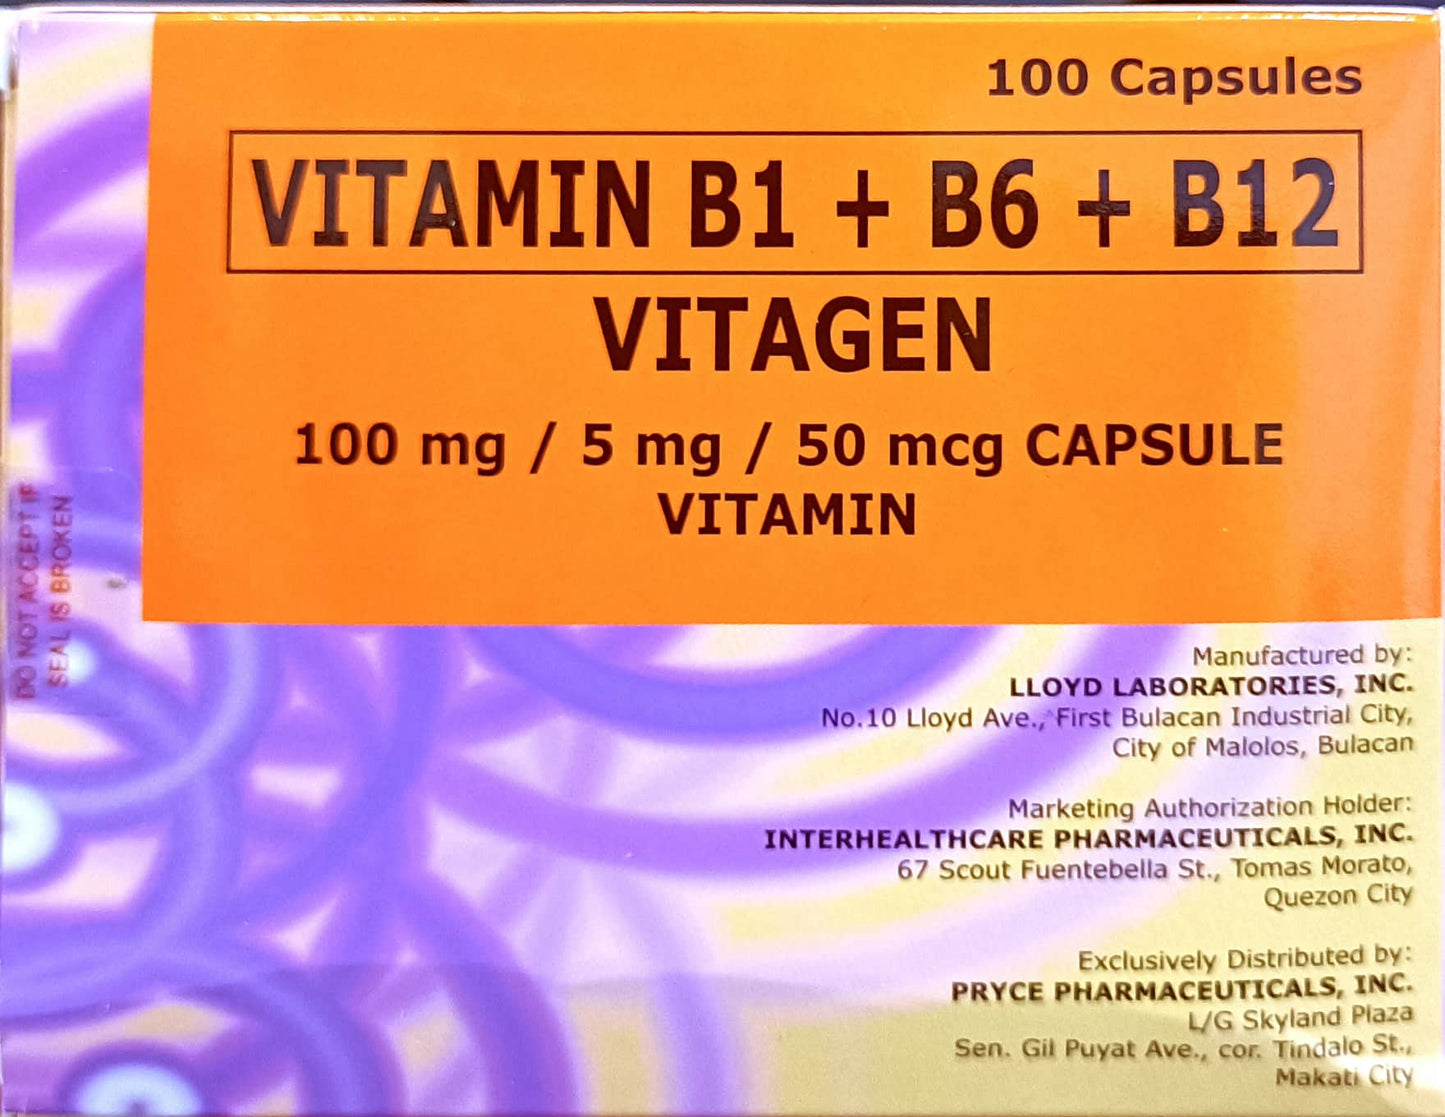 VITAMIN  B1 + B6 + B12 Capsule 100's (VITAGEN)